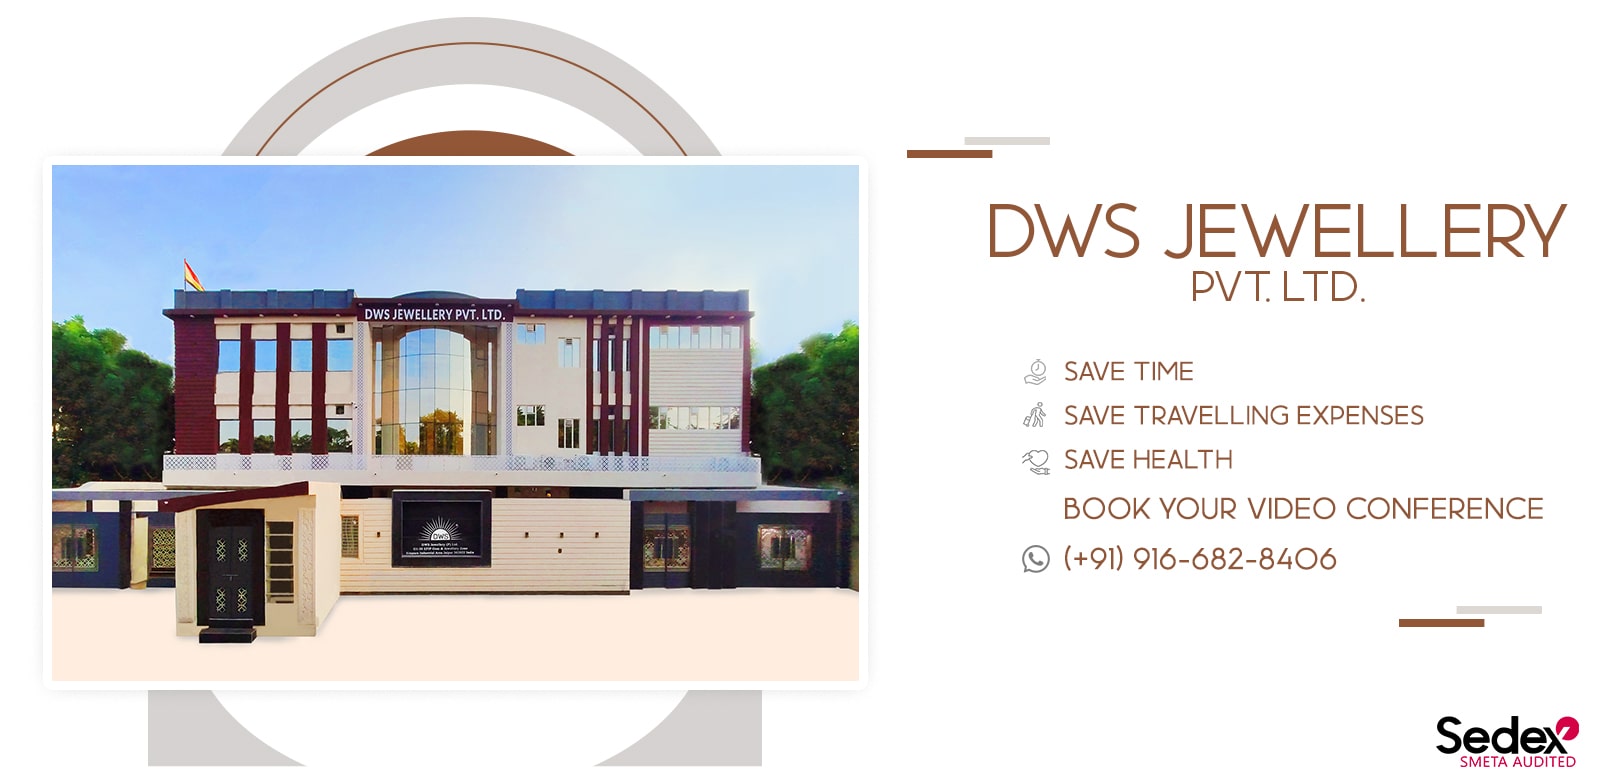 DWS Jewellery Factory